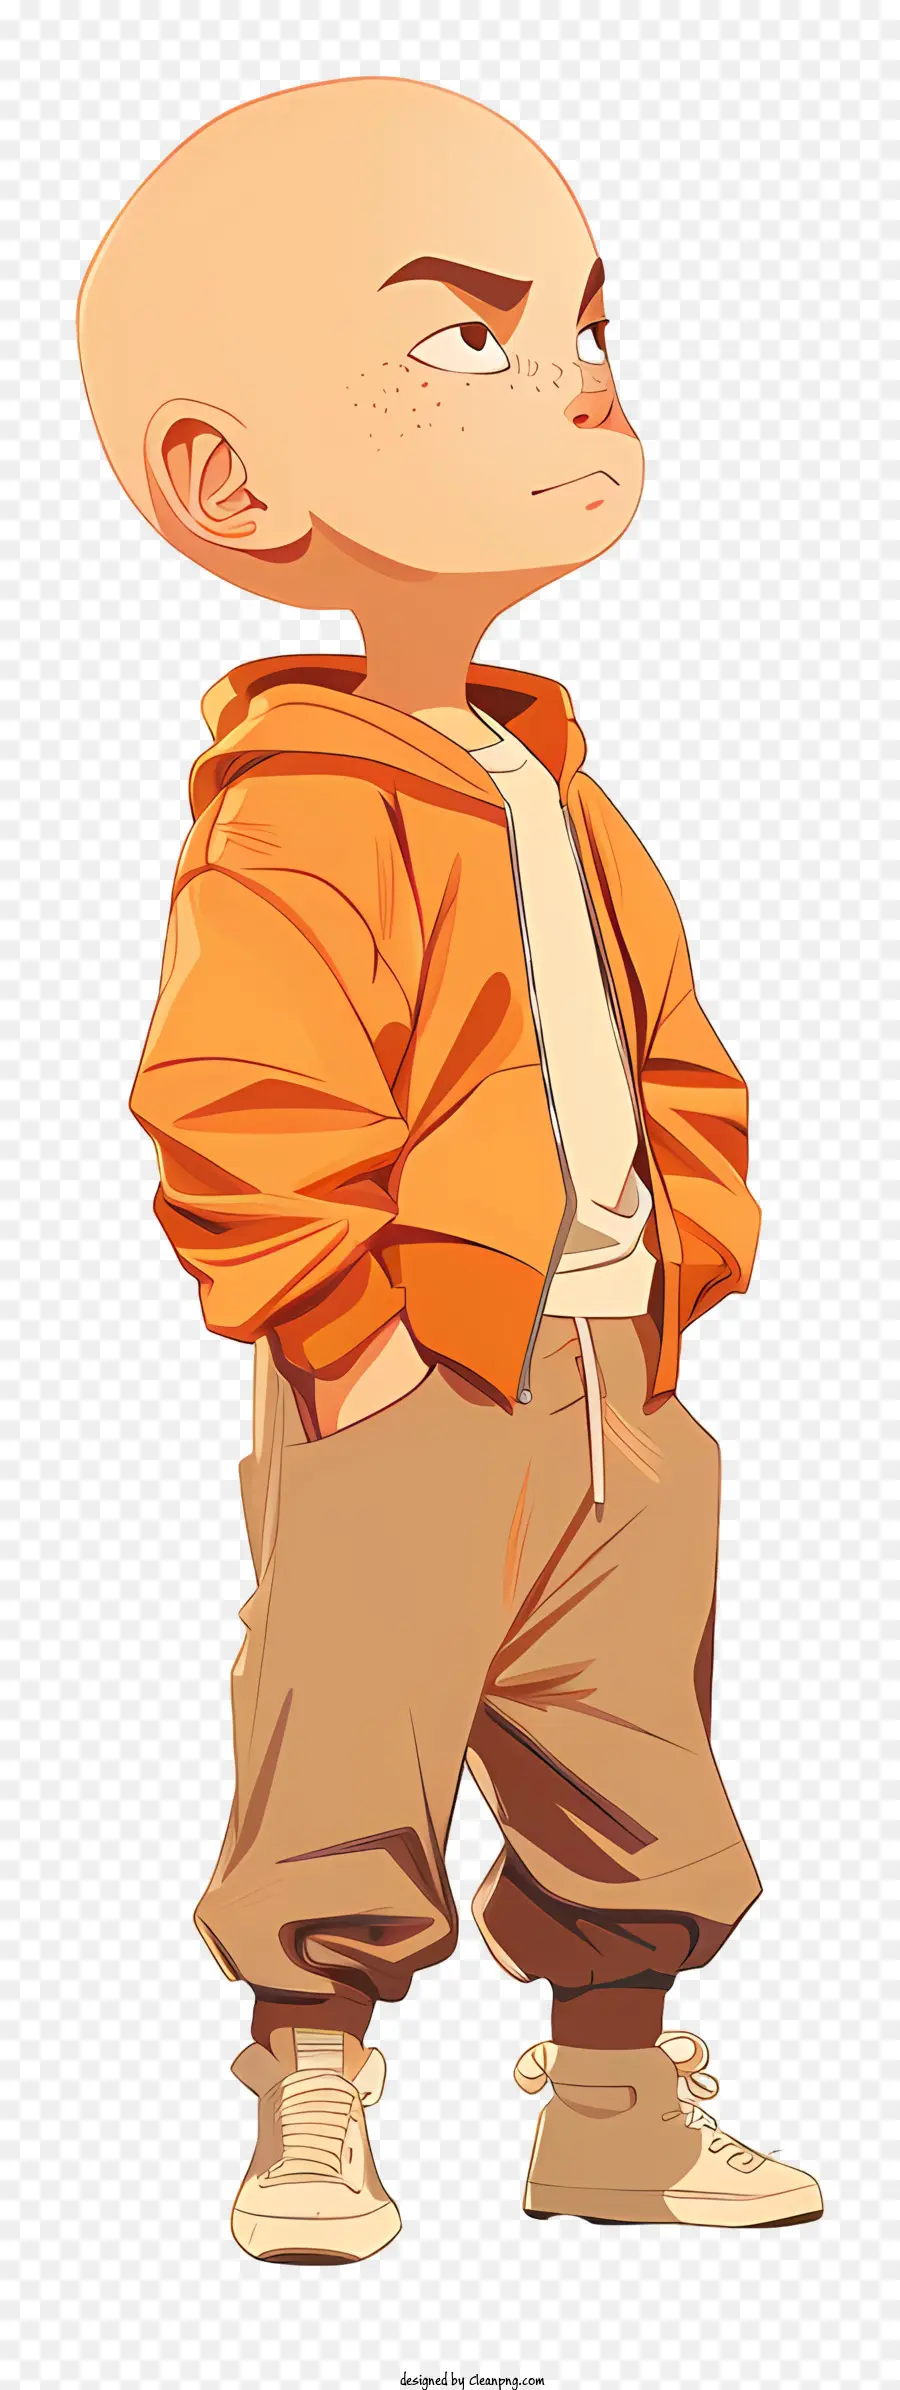 krillin bald man orange jacket brown pants serious expression